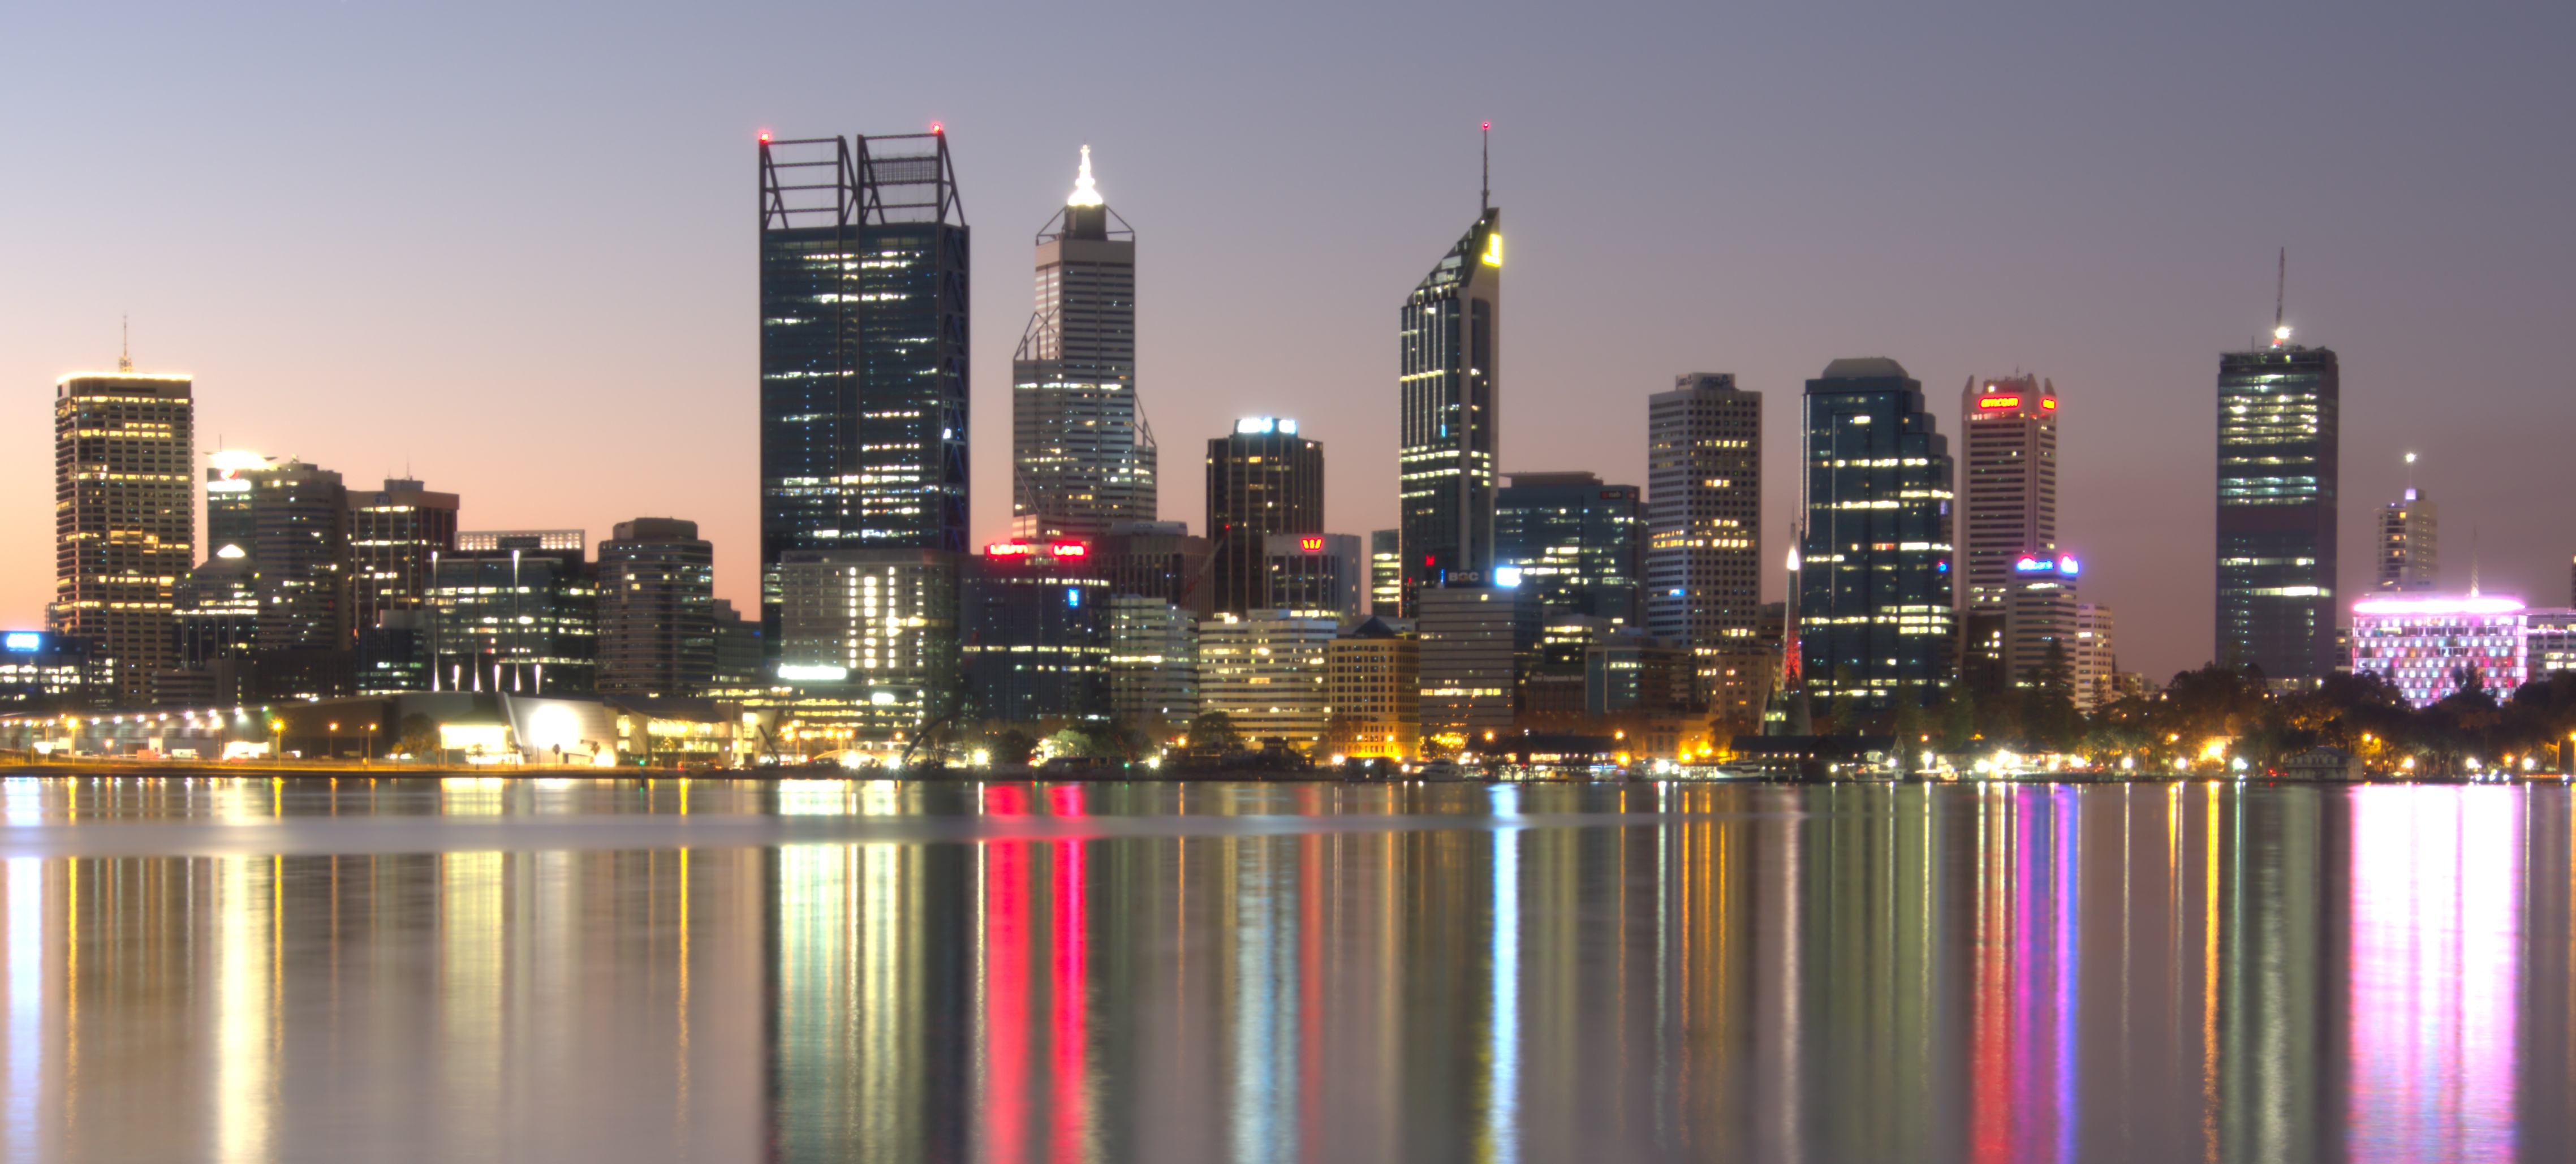 File:Perth skyline 2.jpg - Wikimedia Commons